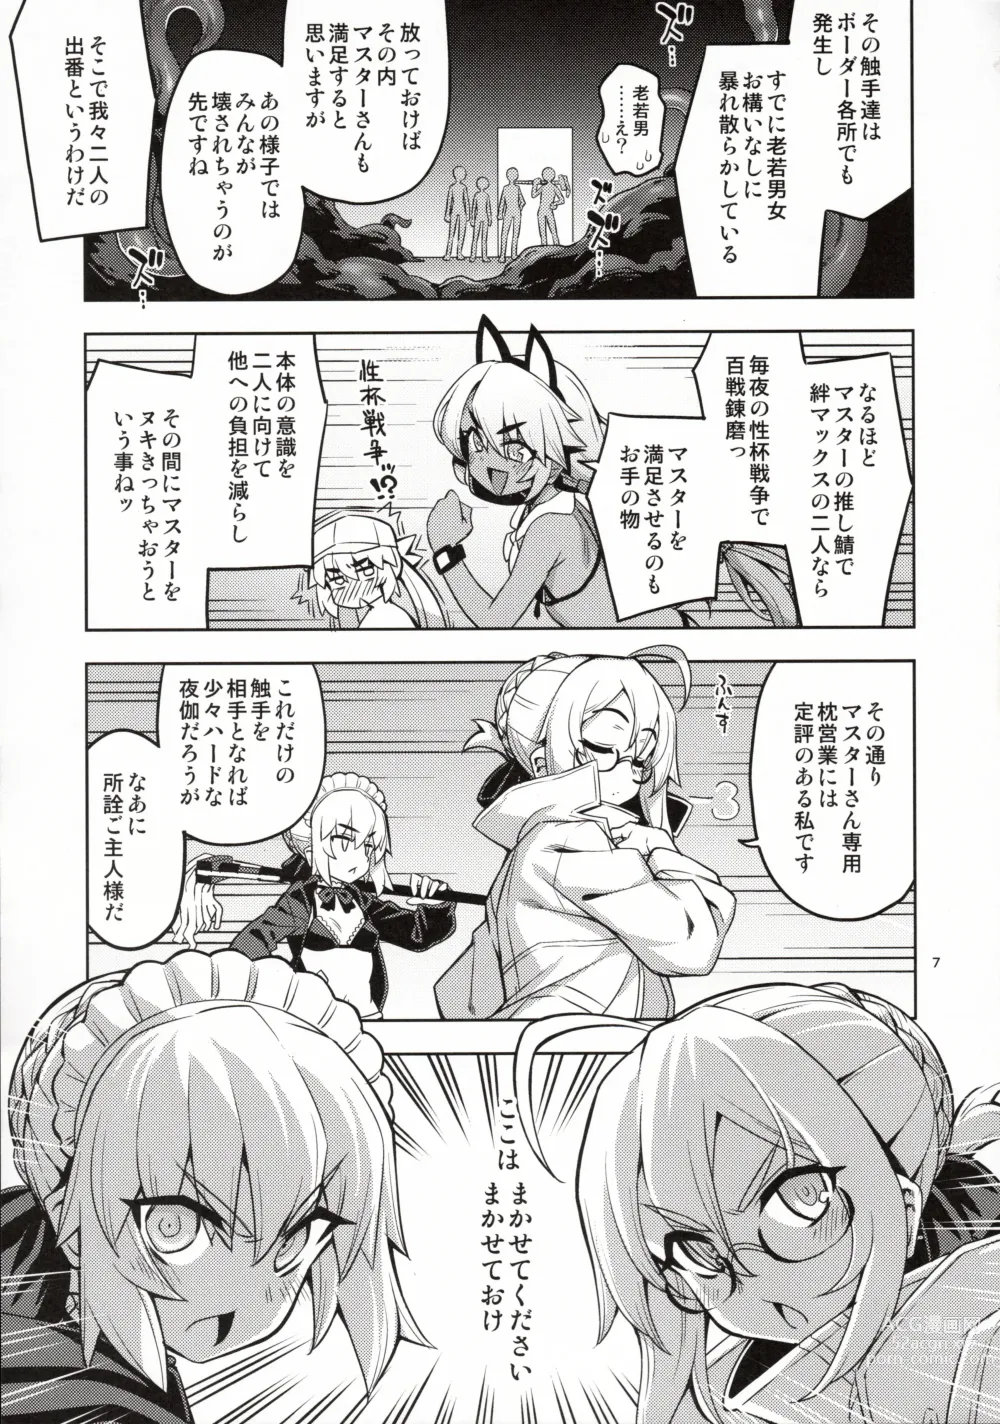 Page 6 of doujinshi RE33